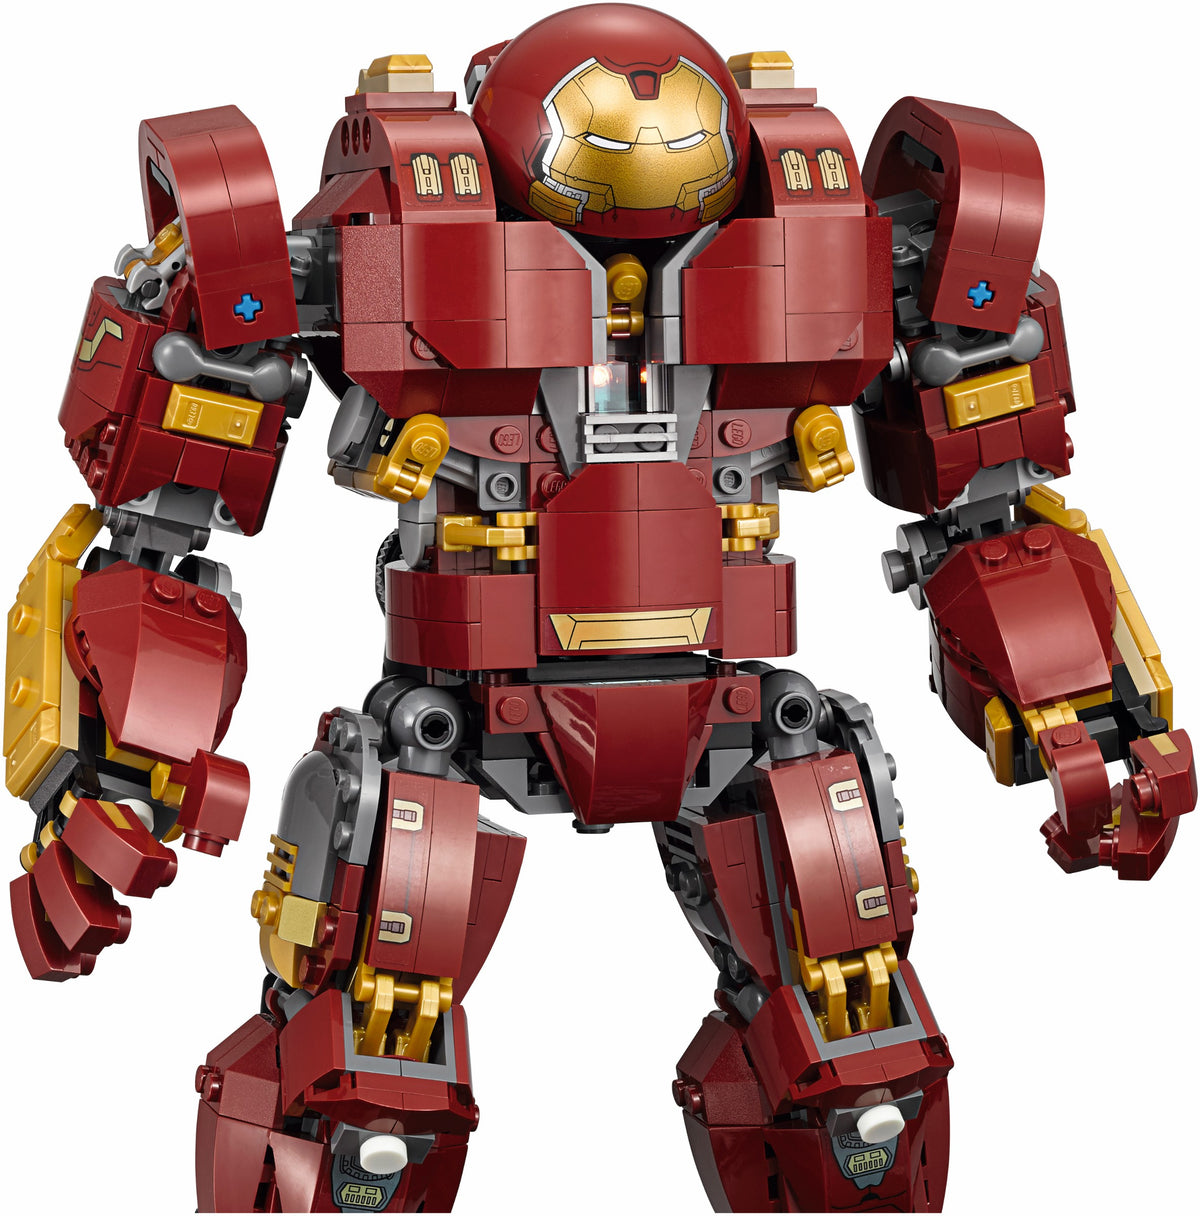 LEGO Marvel Super Heroes 76105 Avengers Infinity War - The Hulkbuster: Ultron Edition